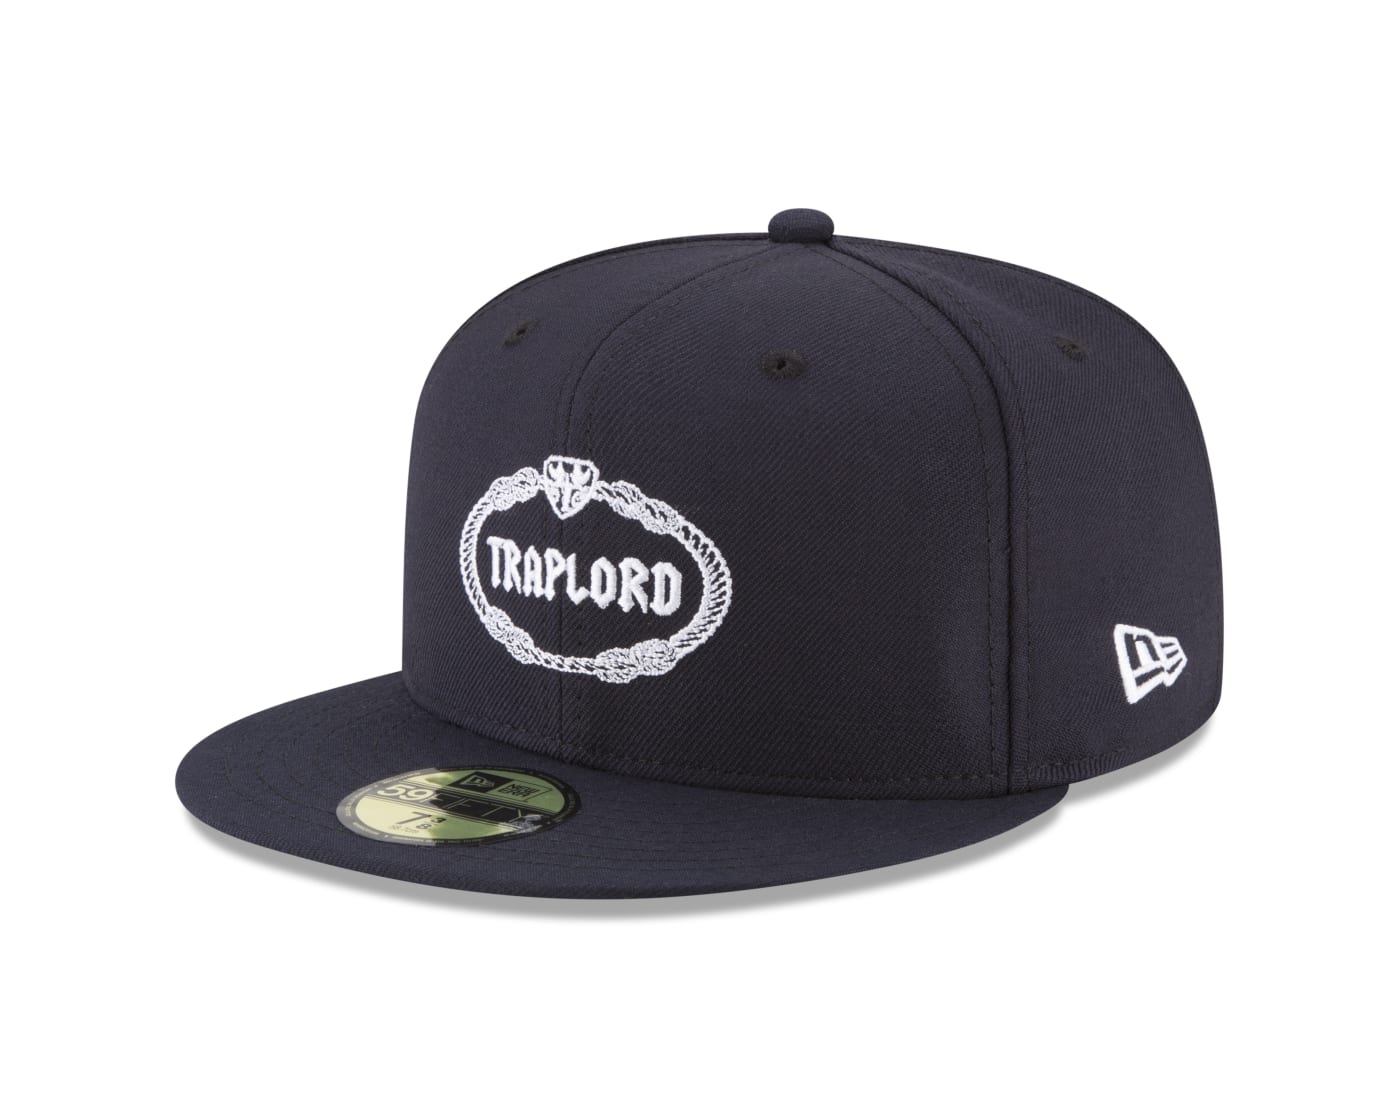 New Era Traplord hat